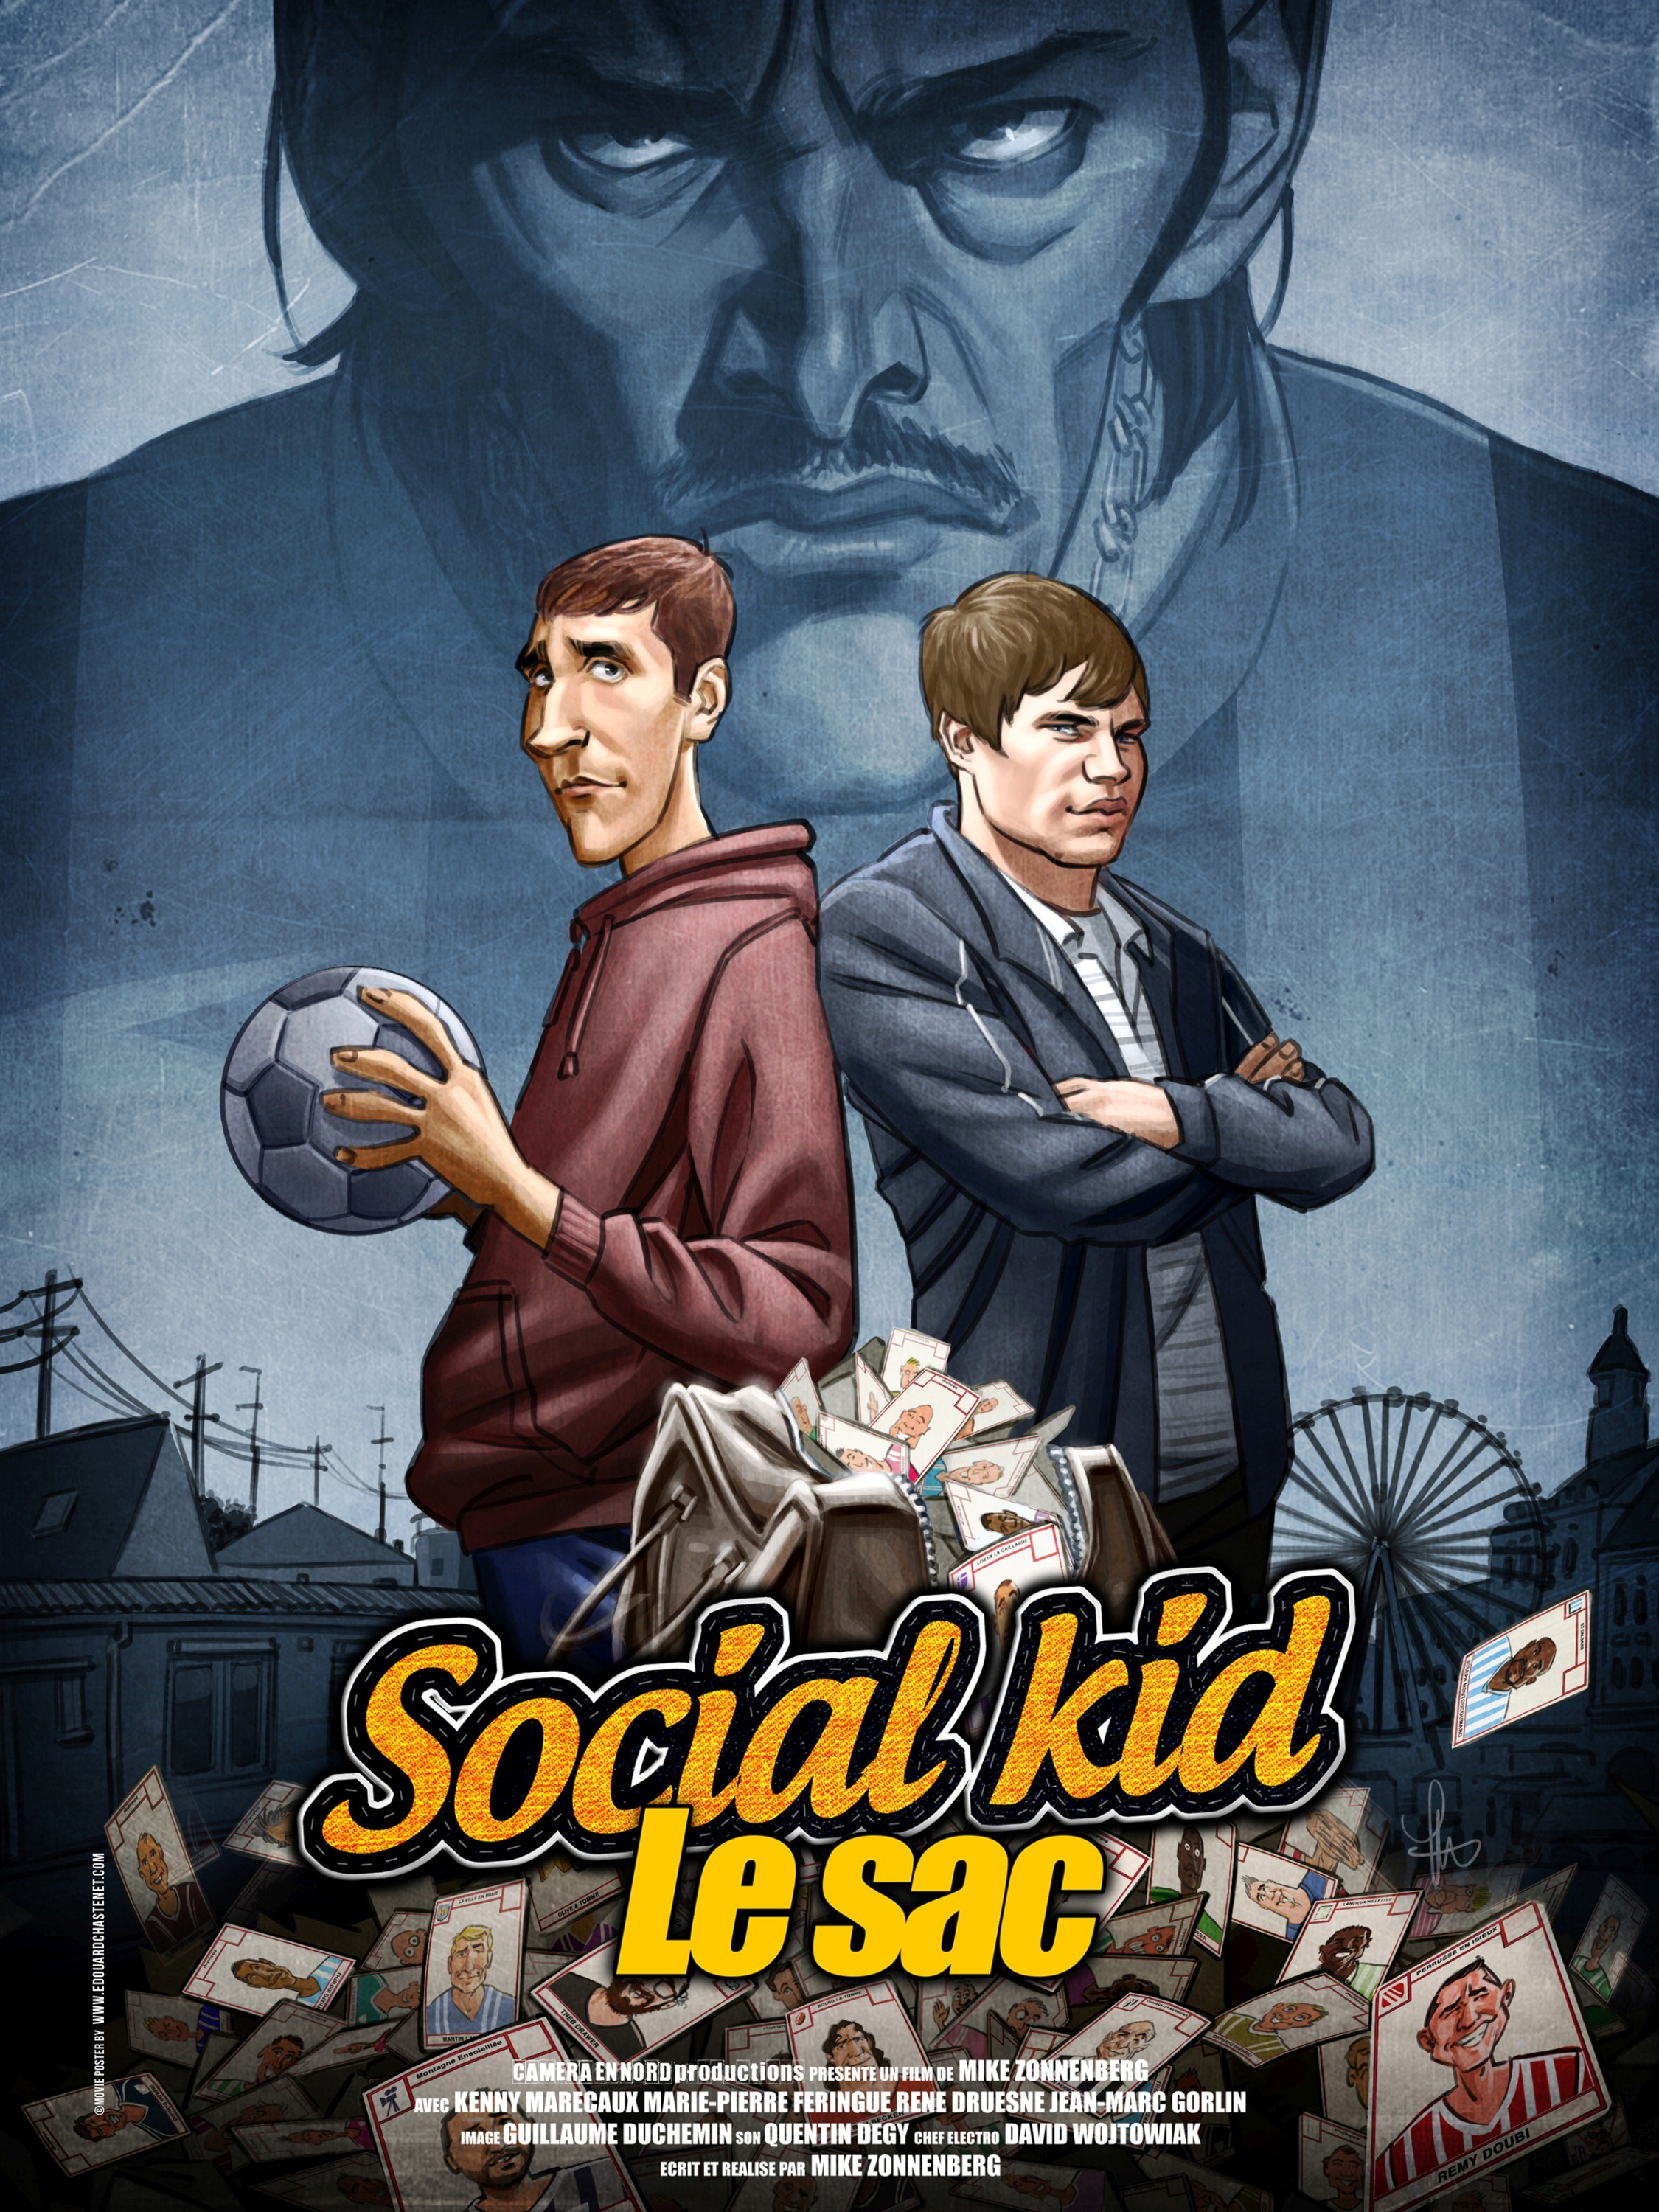 Mega Sized Movie Poster Image for Social Kids - Le Sac